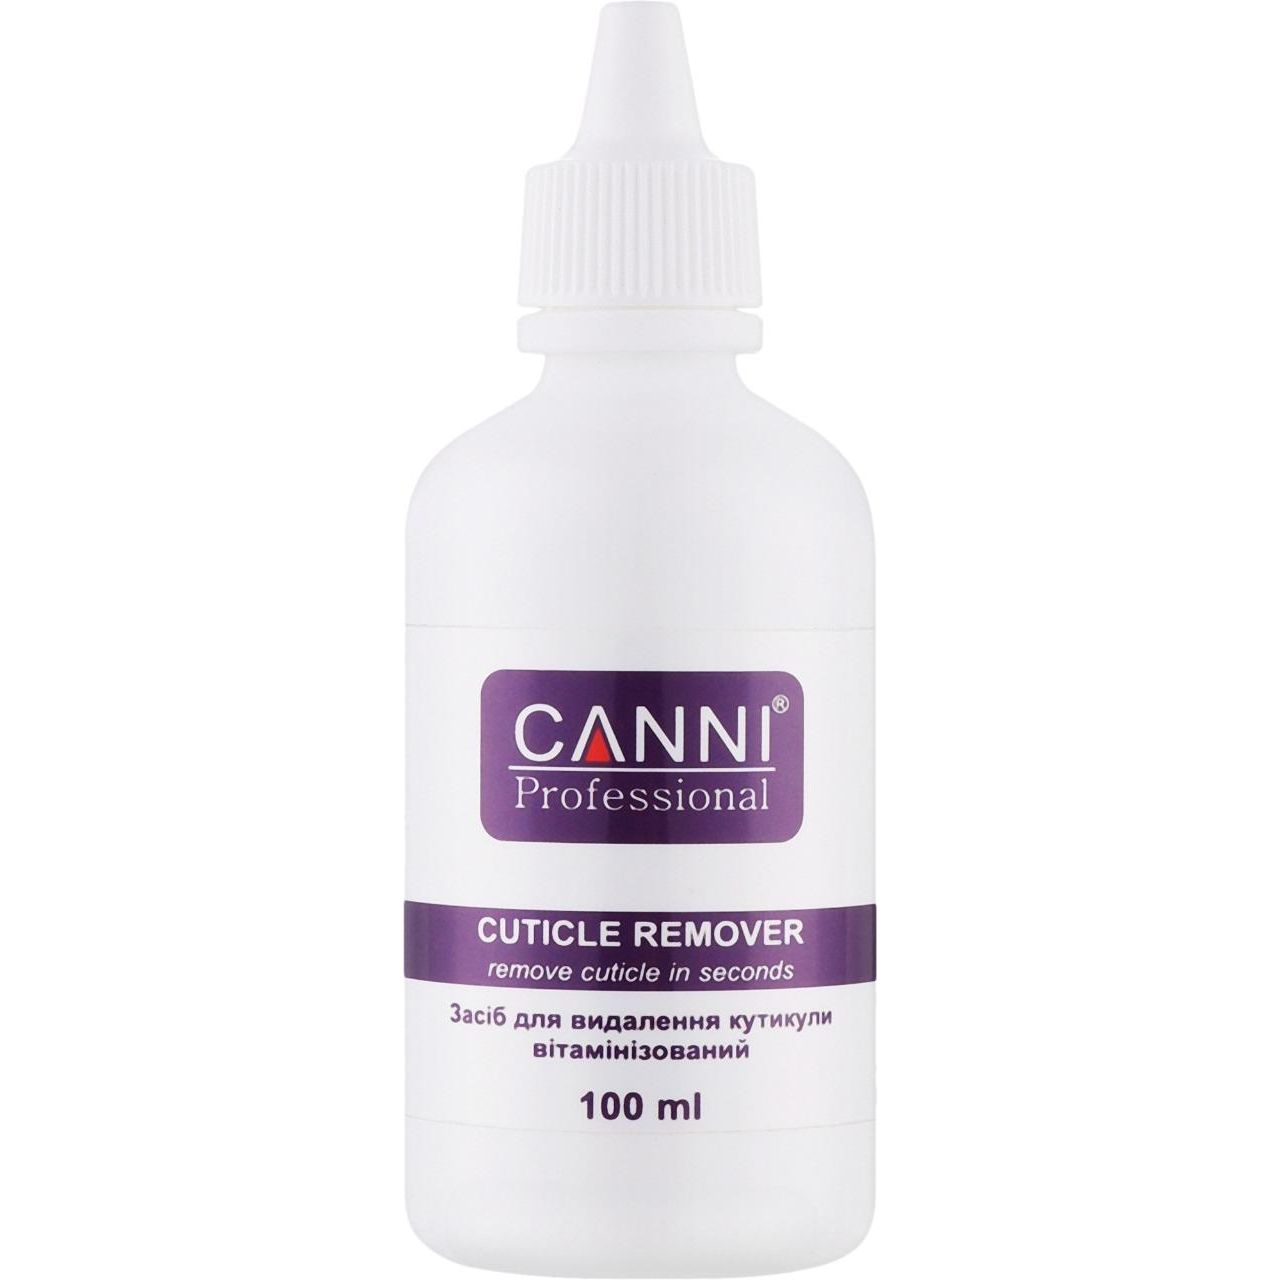 Ремувер для кутикулы Canni витаминизированный 100 мл - фото 1